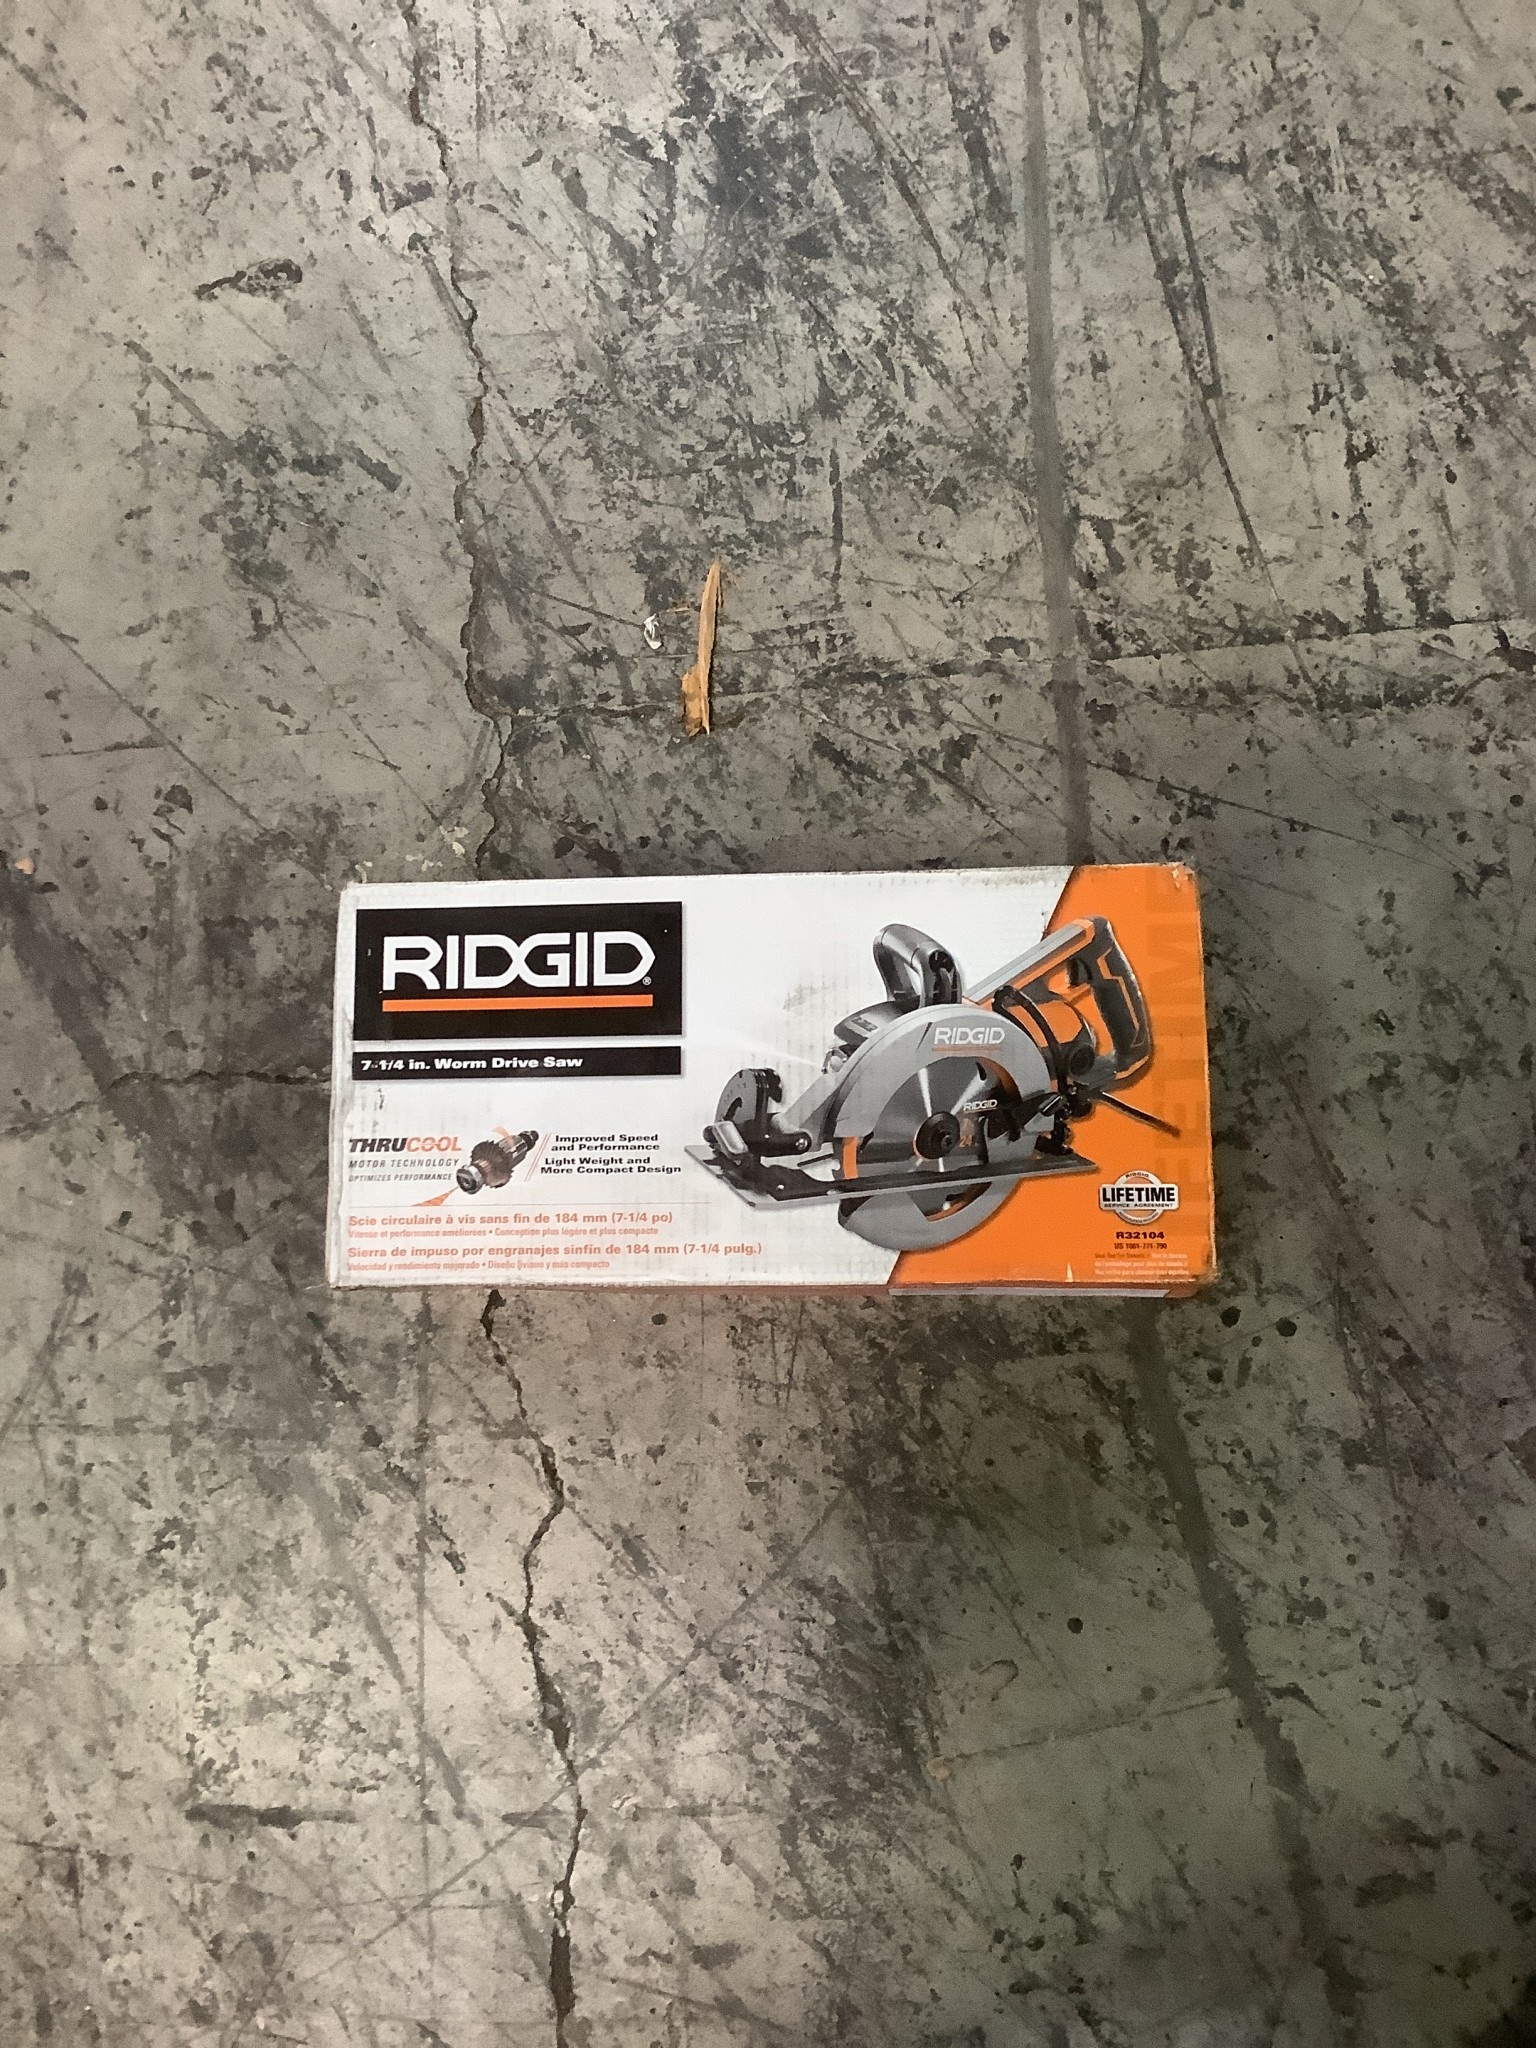 RIDGID R32104 THRUCOOL 15 Amp 7-1/4 in. Worm Drive Circular Saw Discount  Depot